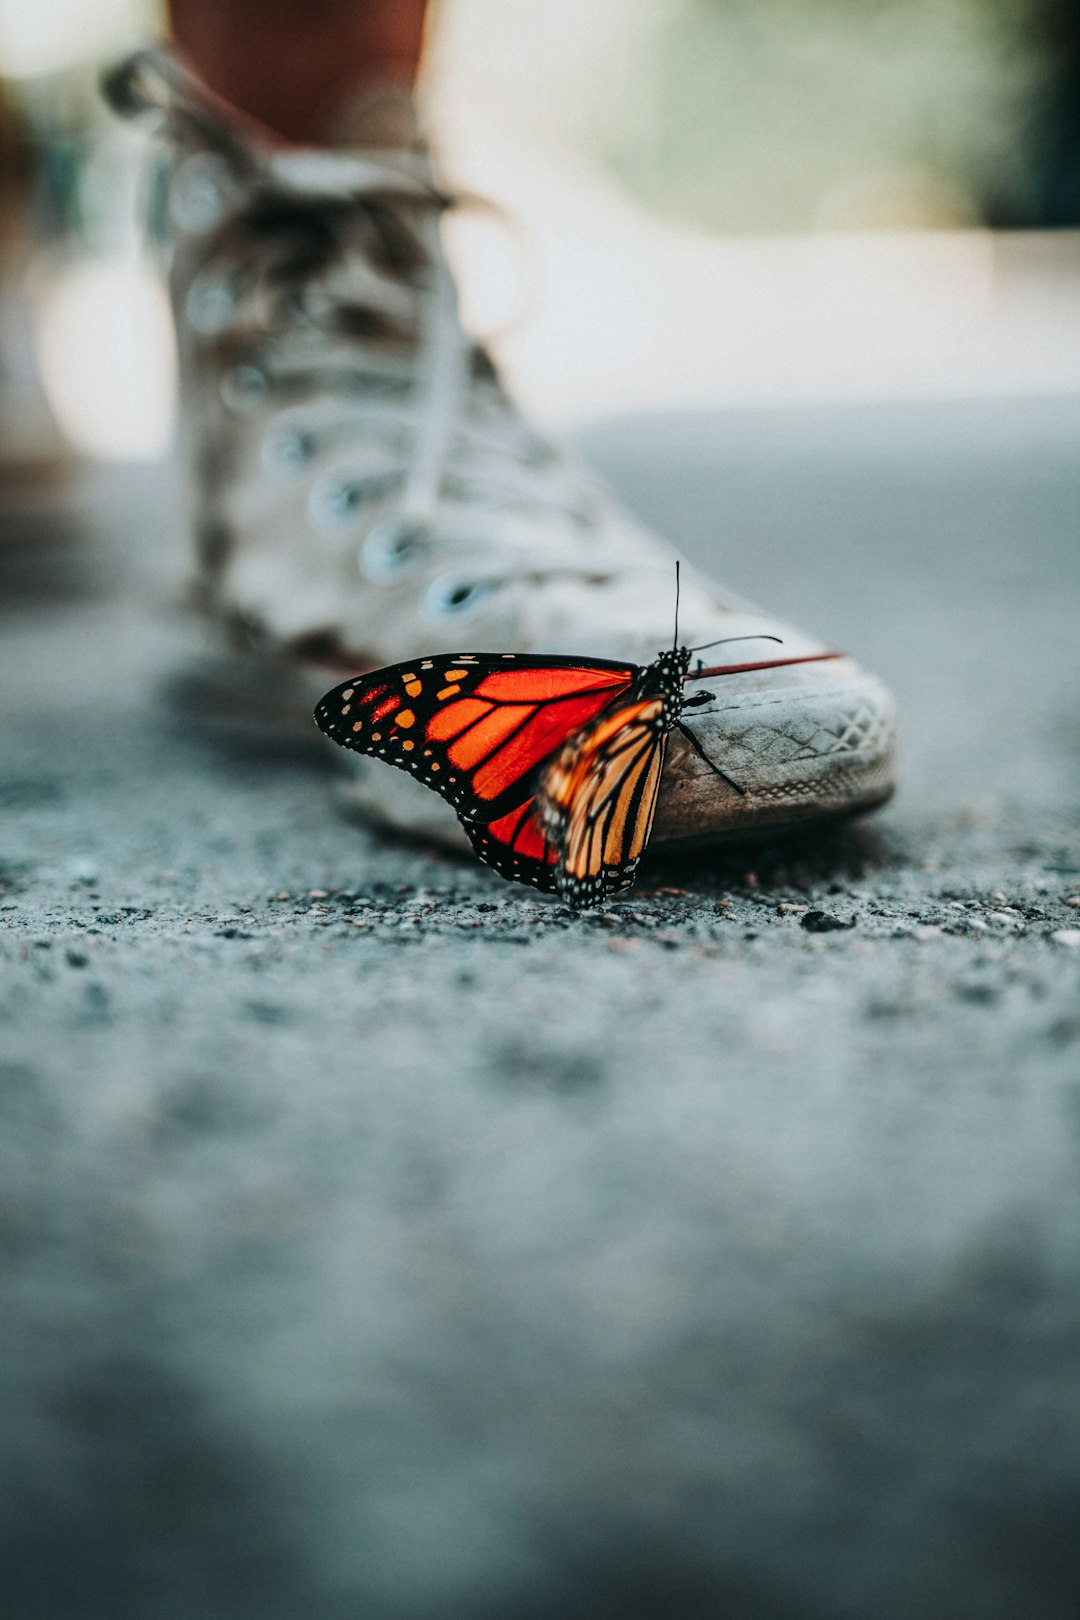 A butterfly story